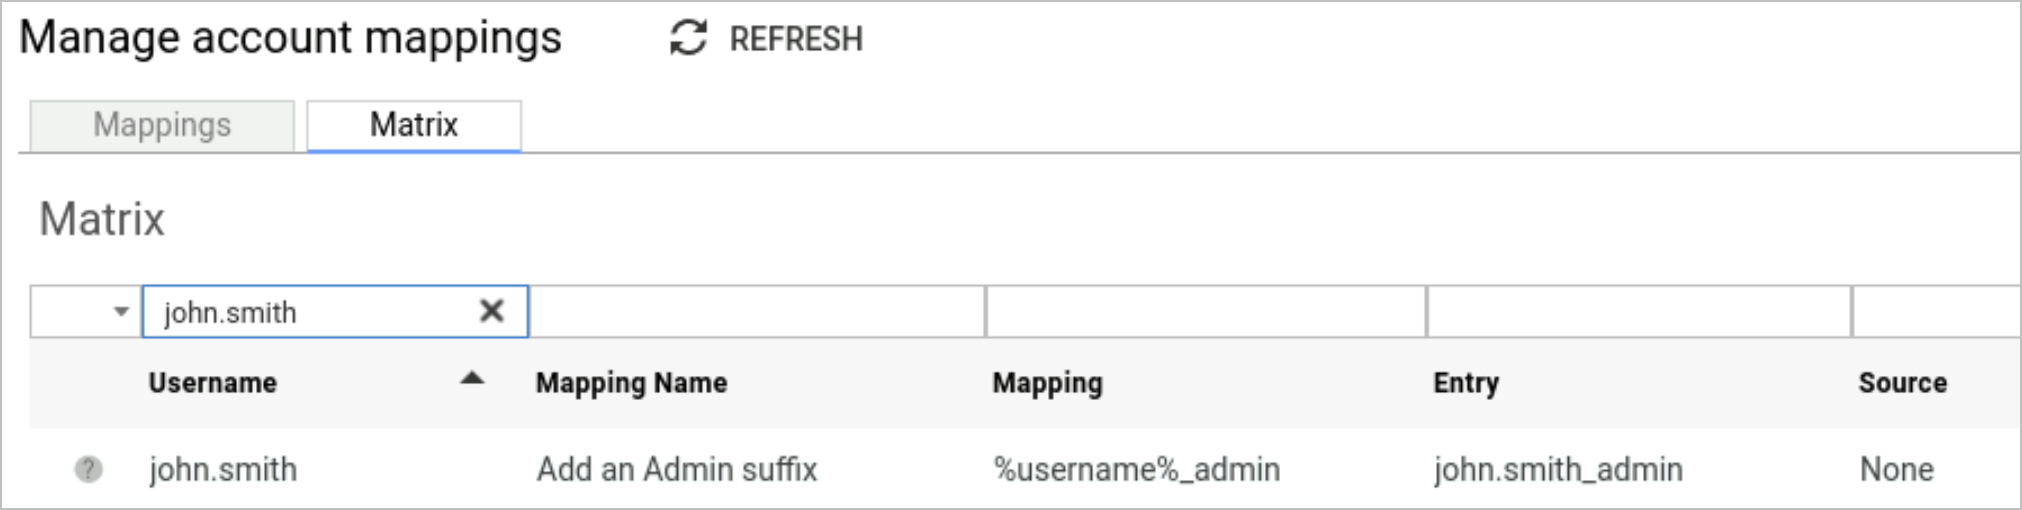 Manage account mapping matrix tab